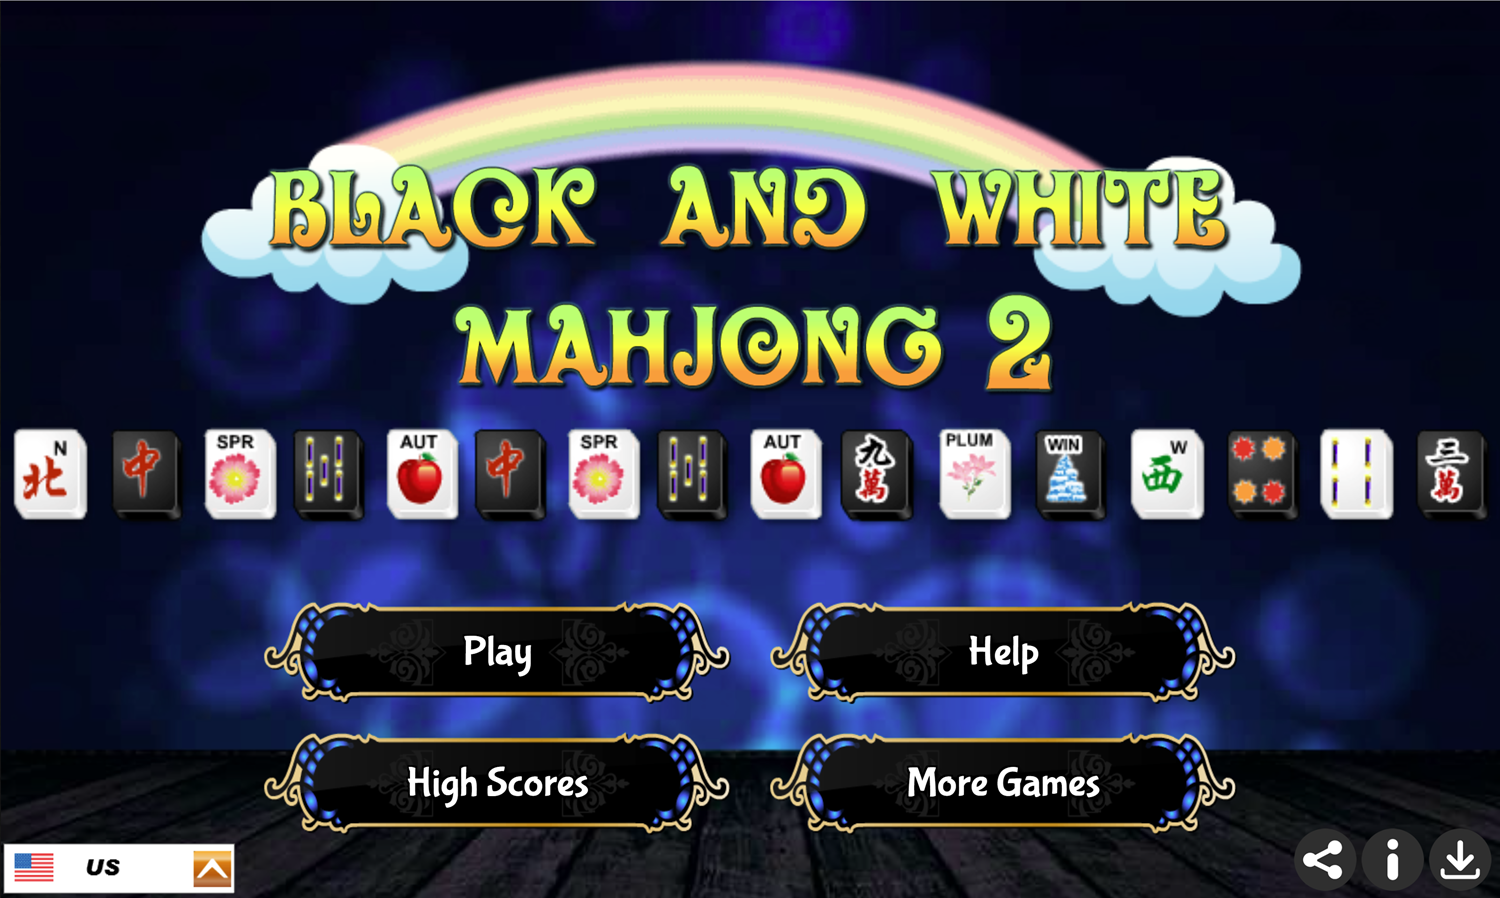 Black and White Mahjong 2 Game Welcome Screen Screenshot.